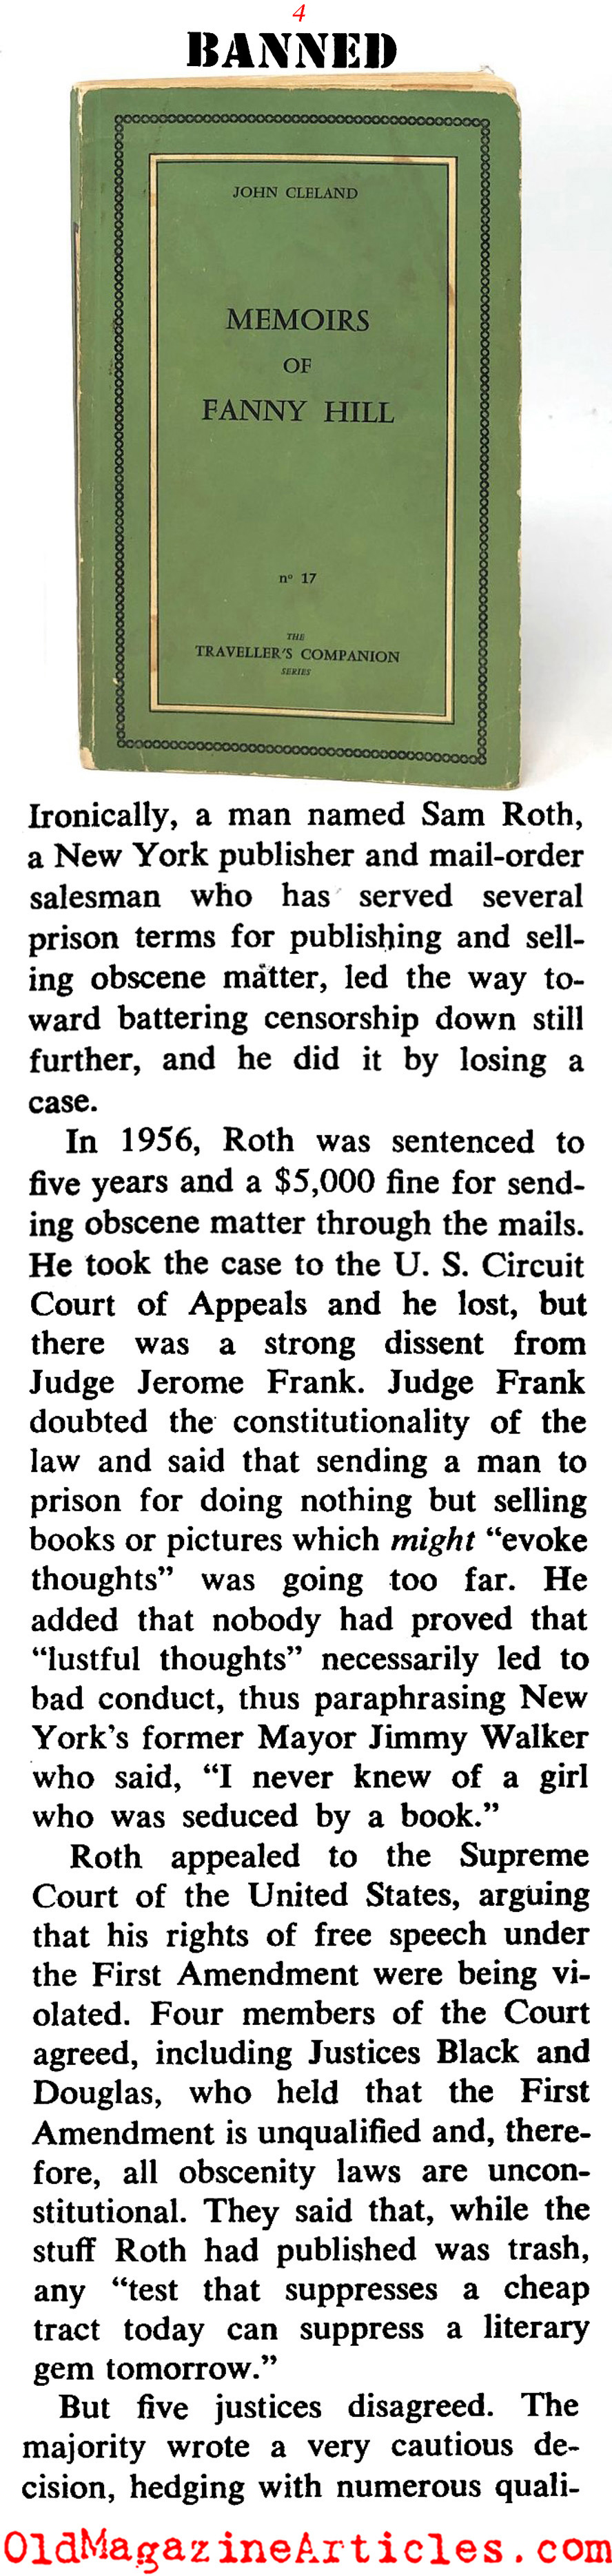 Banned Book$ (Coronet Magazine, 1964)